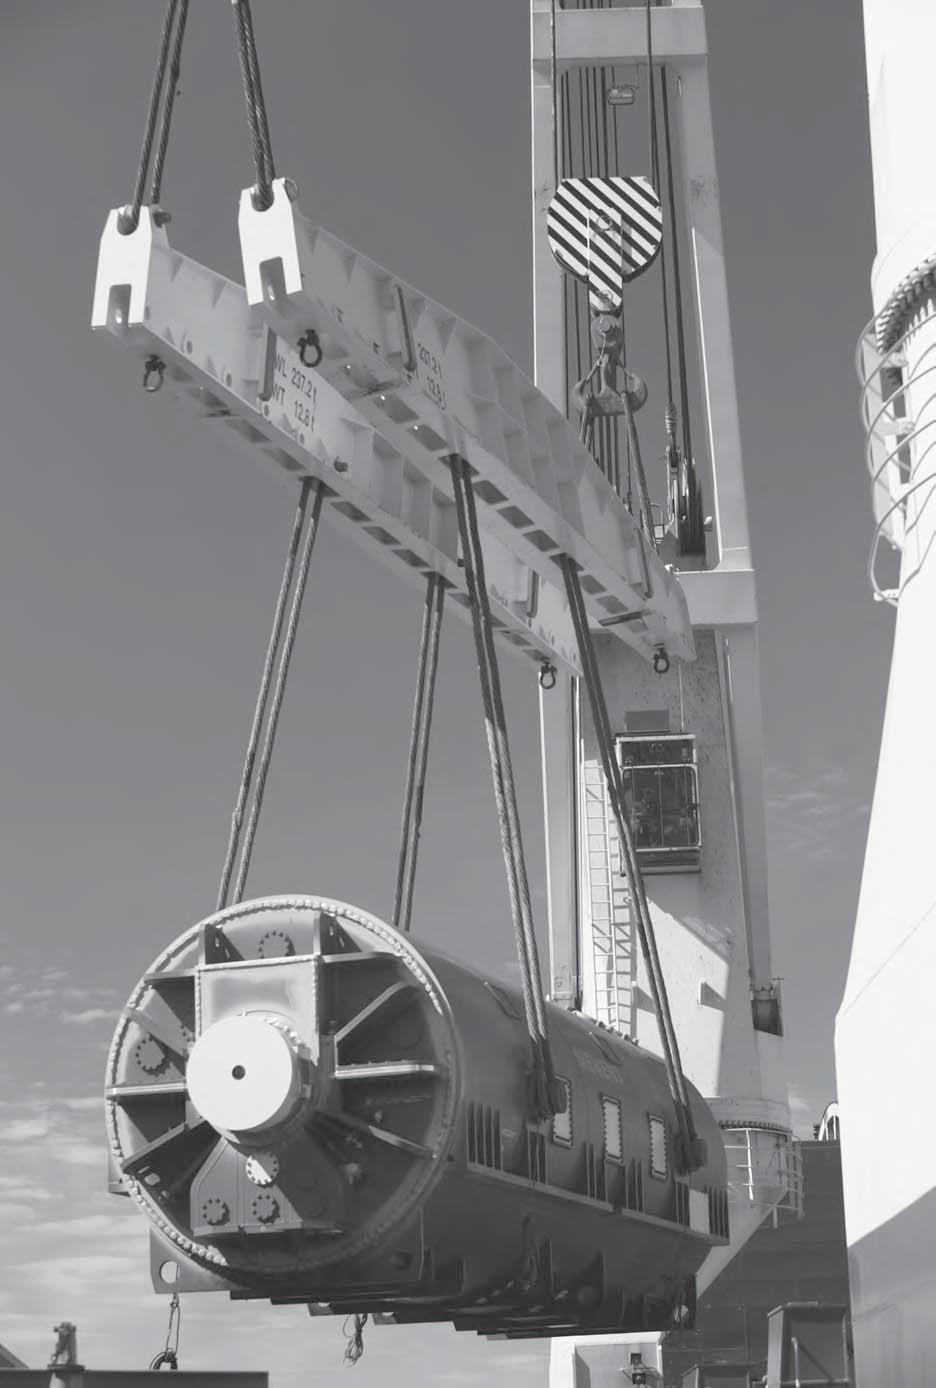 Siemens generator being lifted onboard breakbulk